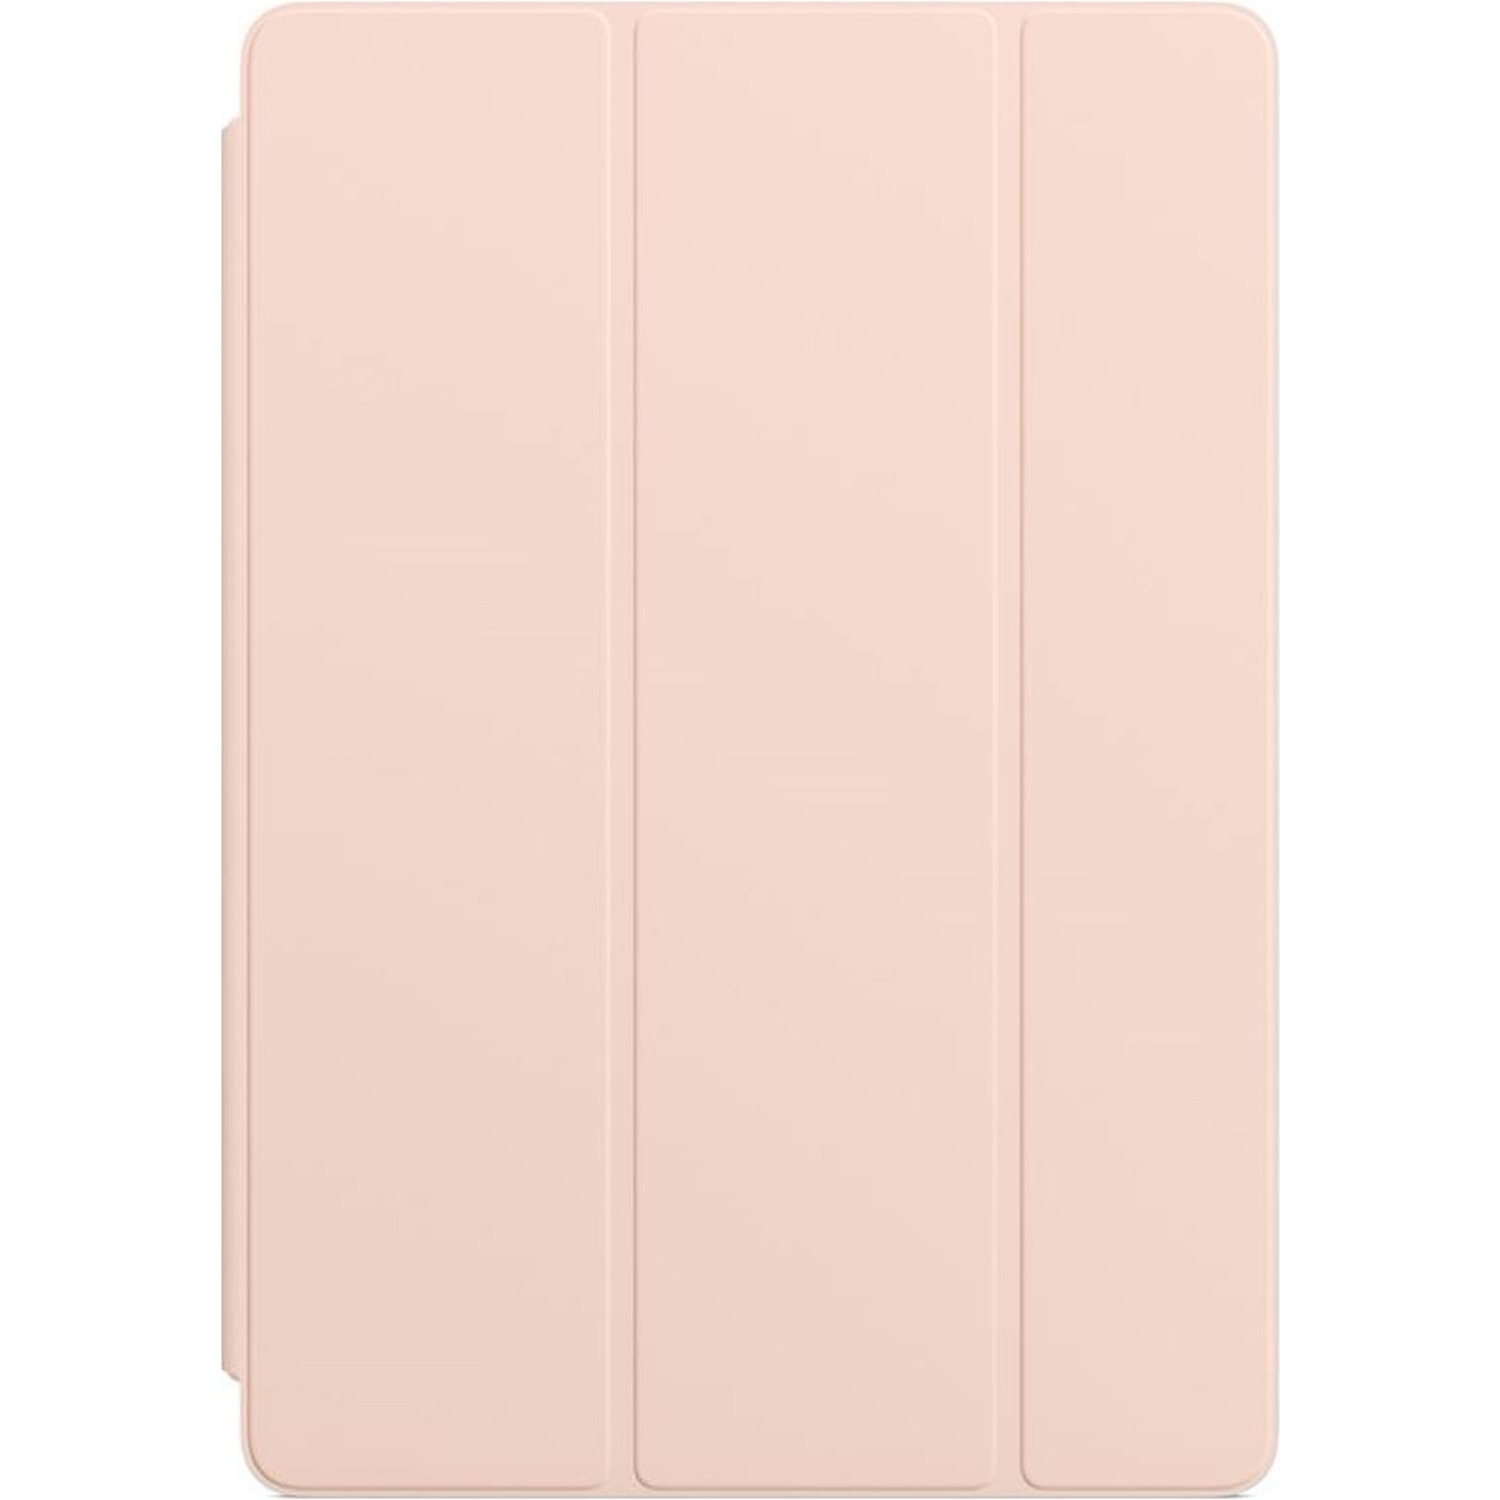 Immagine per Smart Cover Apple per iPad e iPad air pink        MVQ42ZM/A da DIMOStore